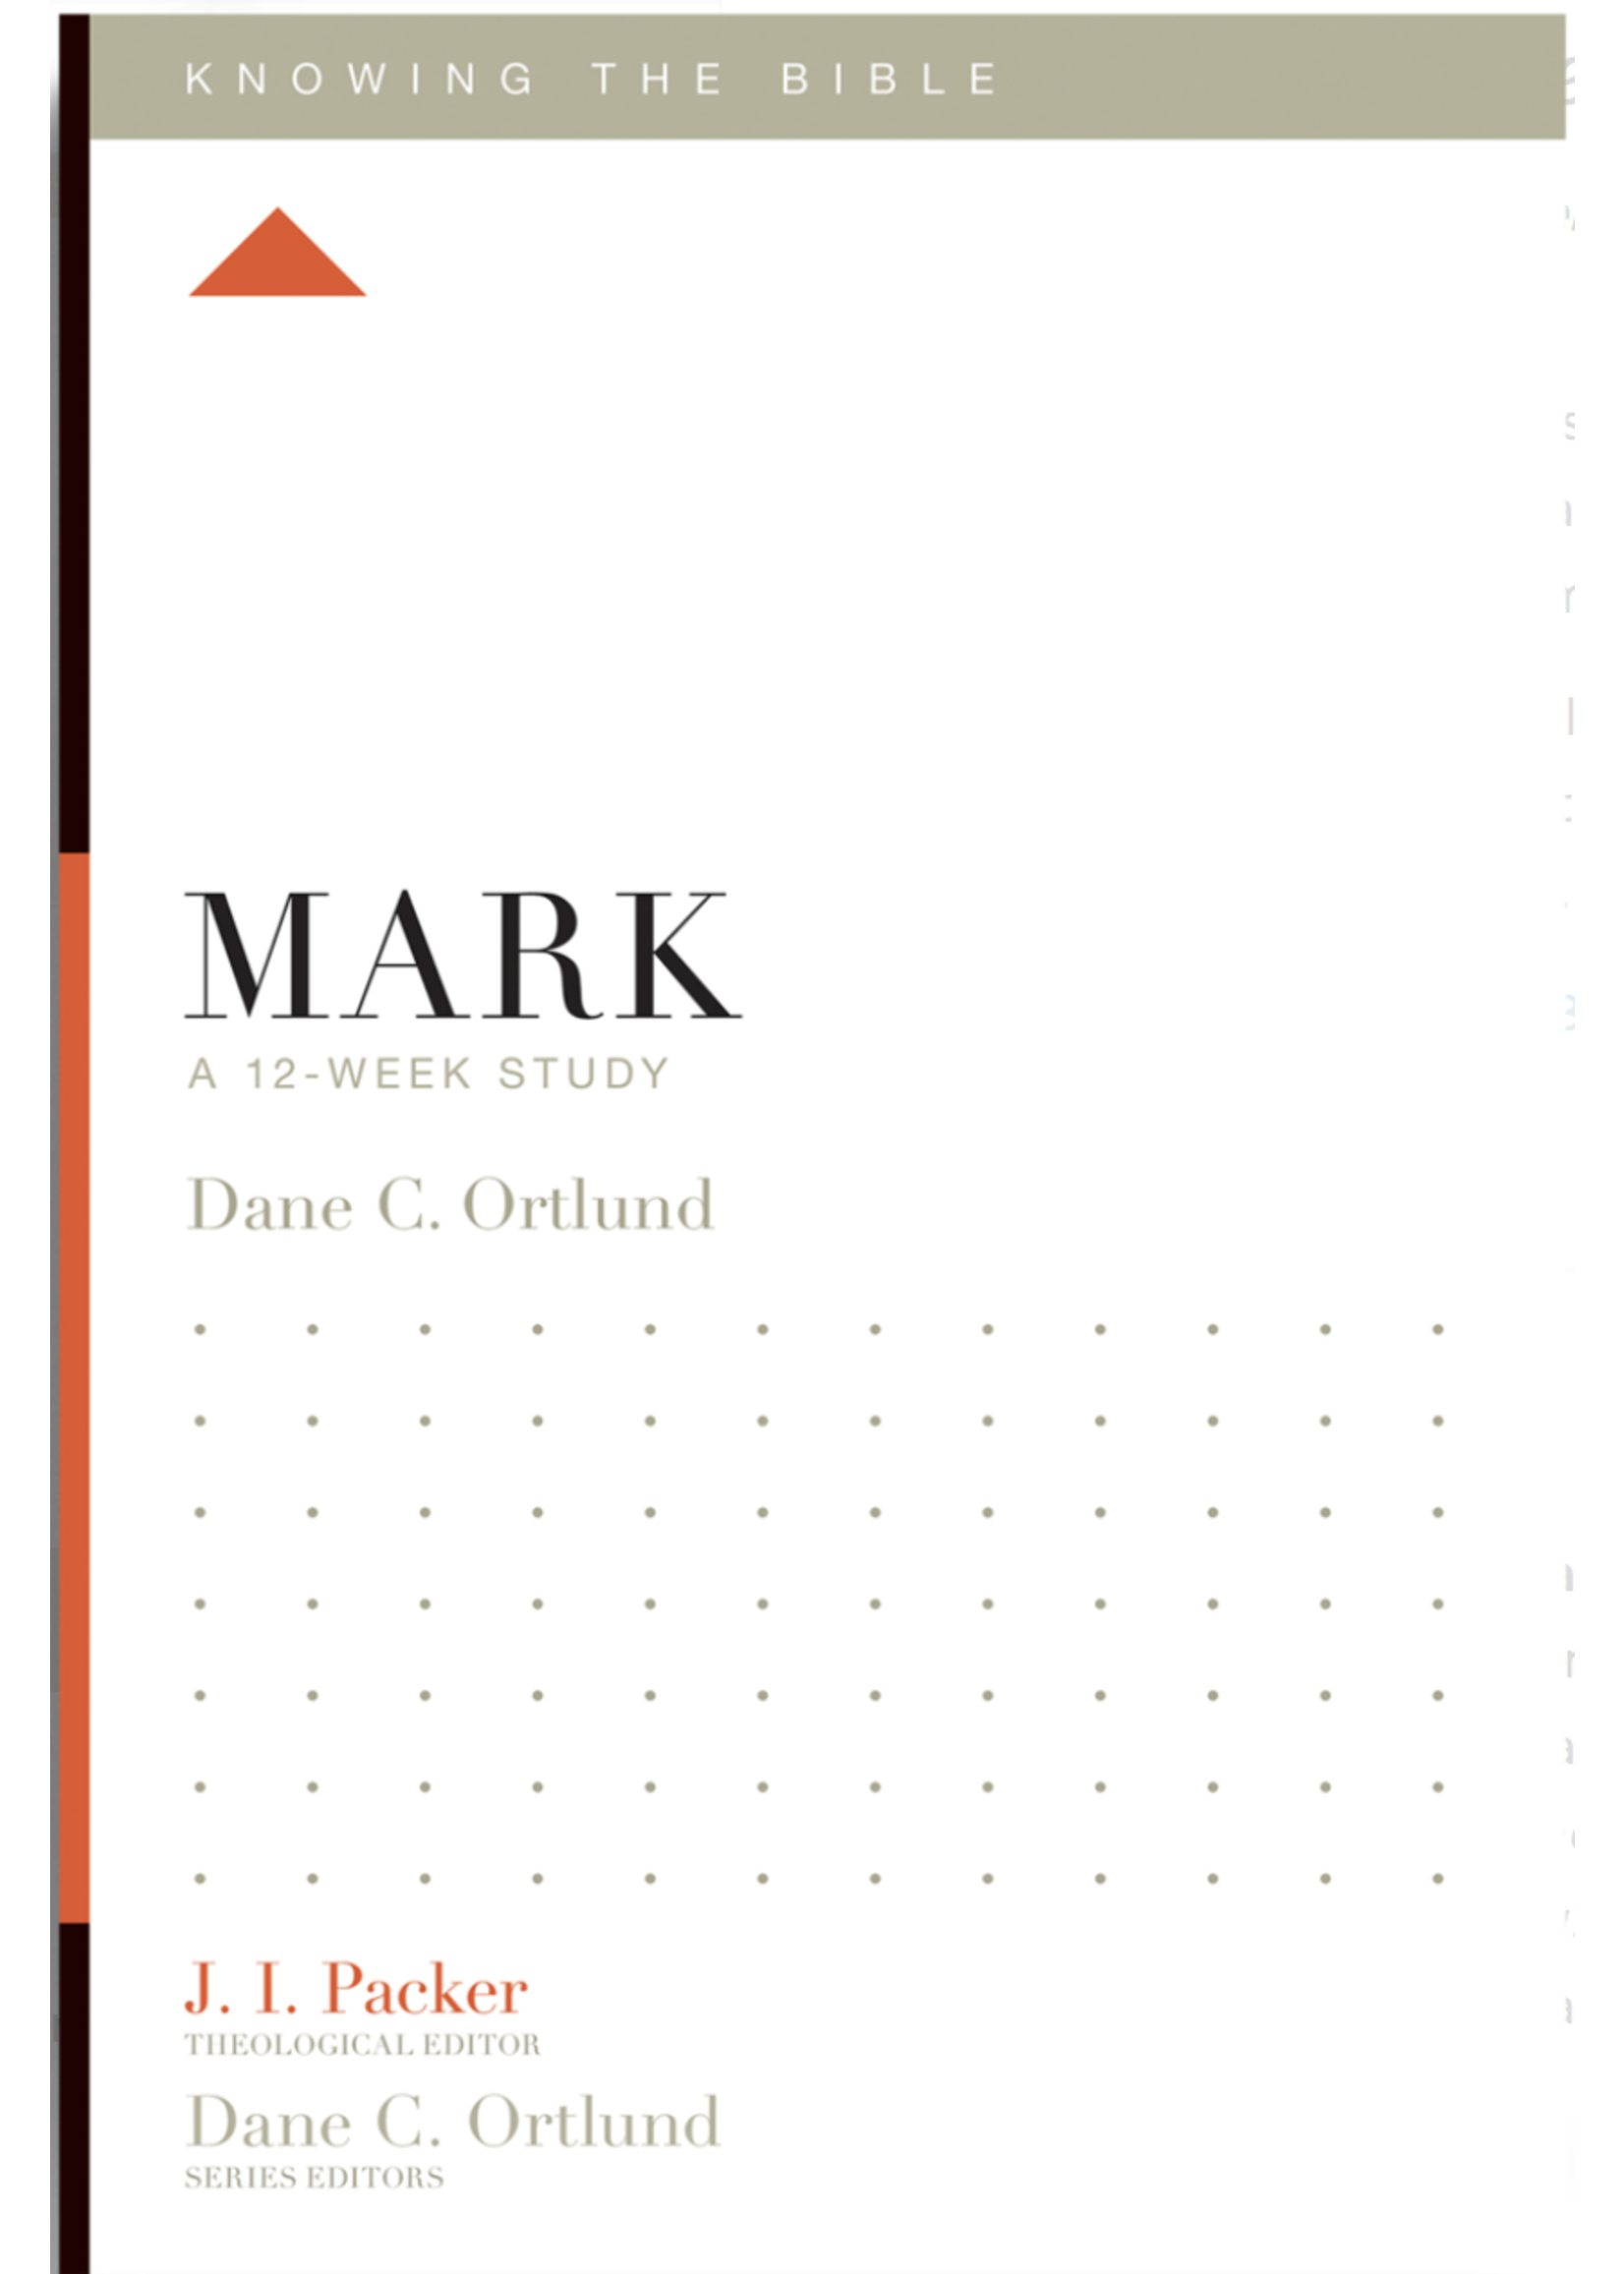 Ortlund, Dane Mark: A 12-Week Study (Knowing The Bible) [Dane C. Ortlund]